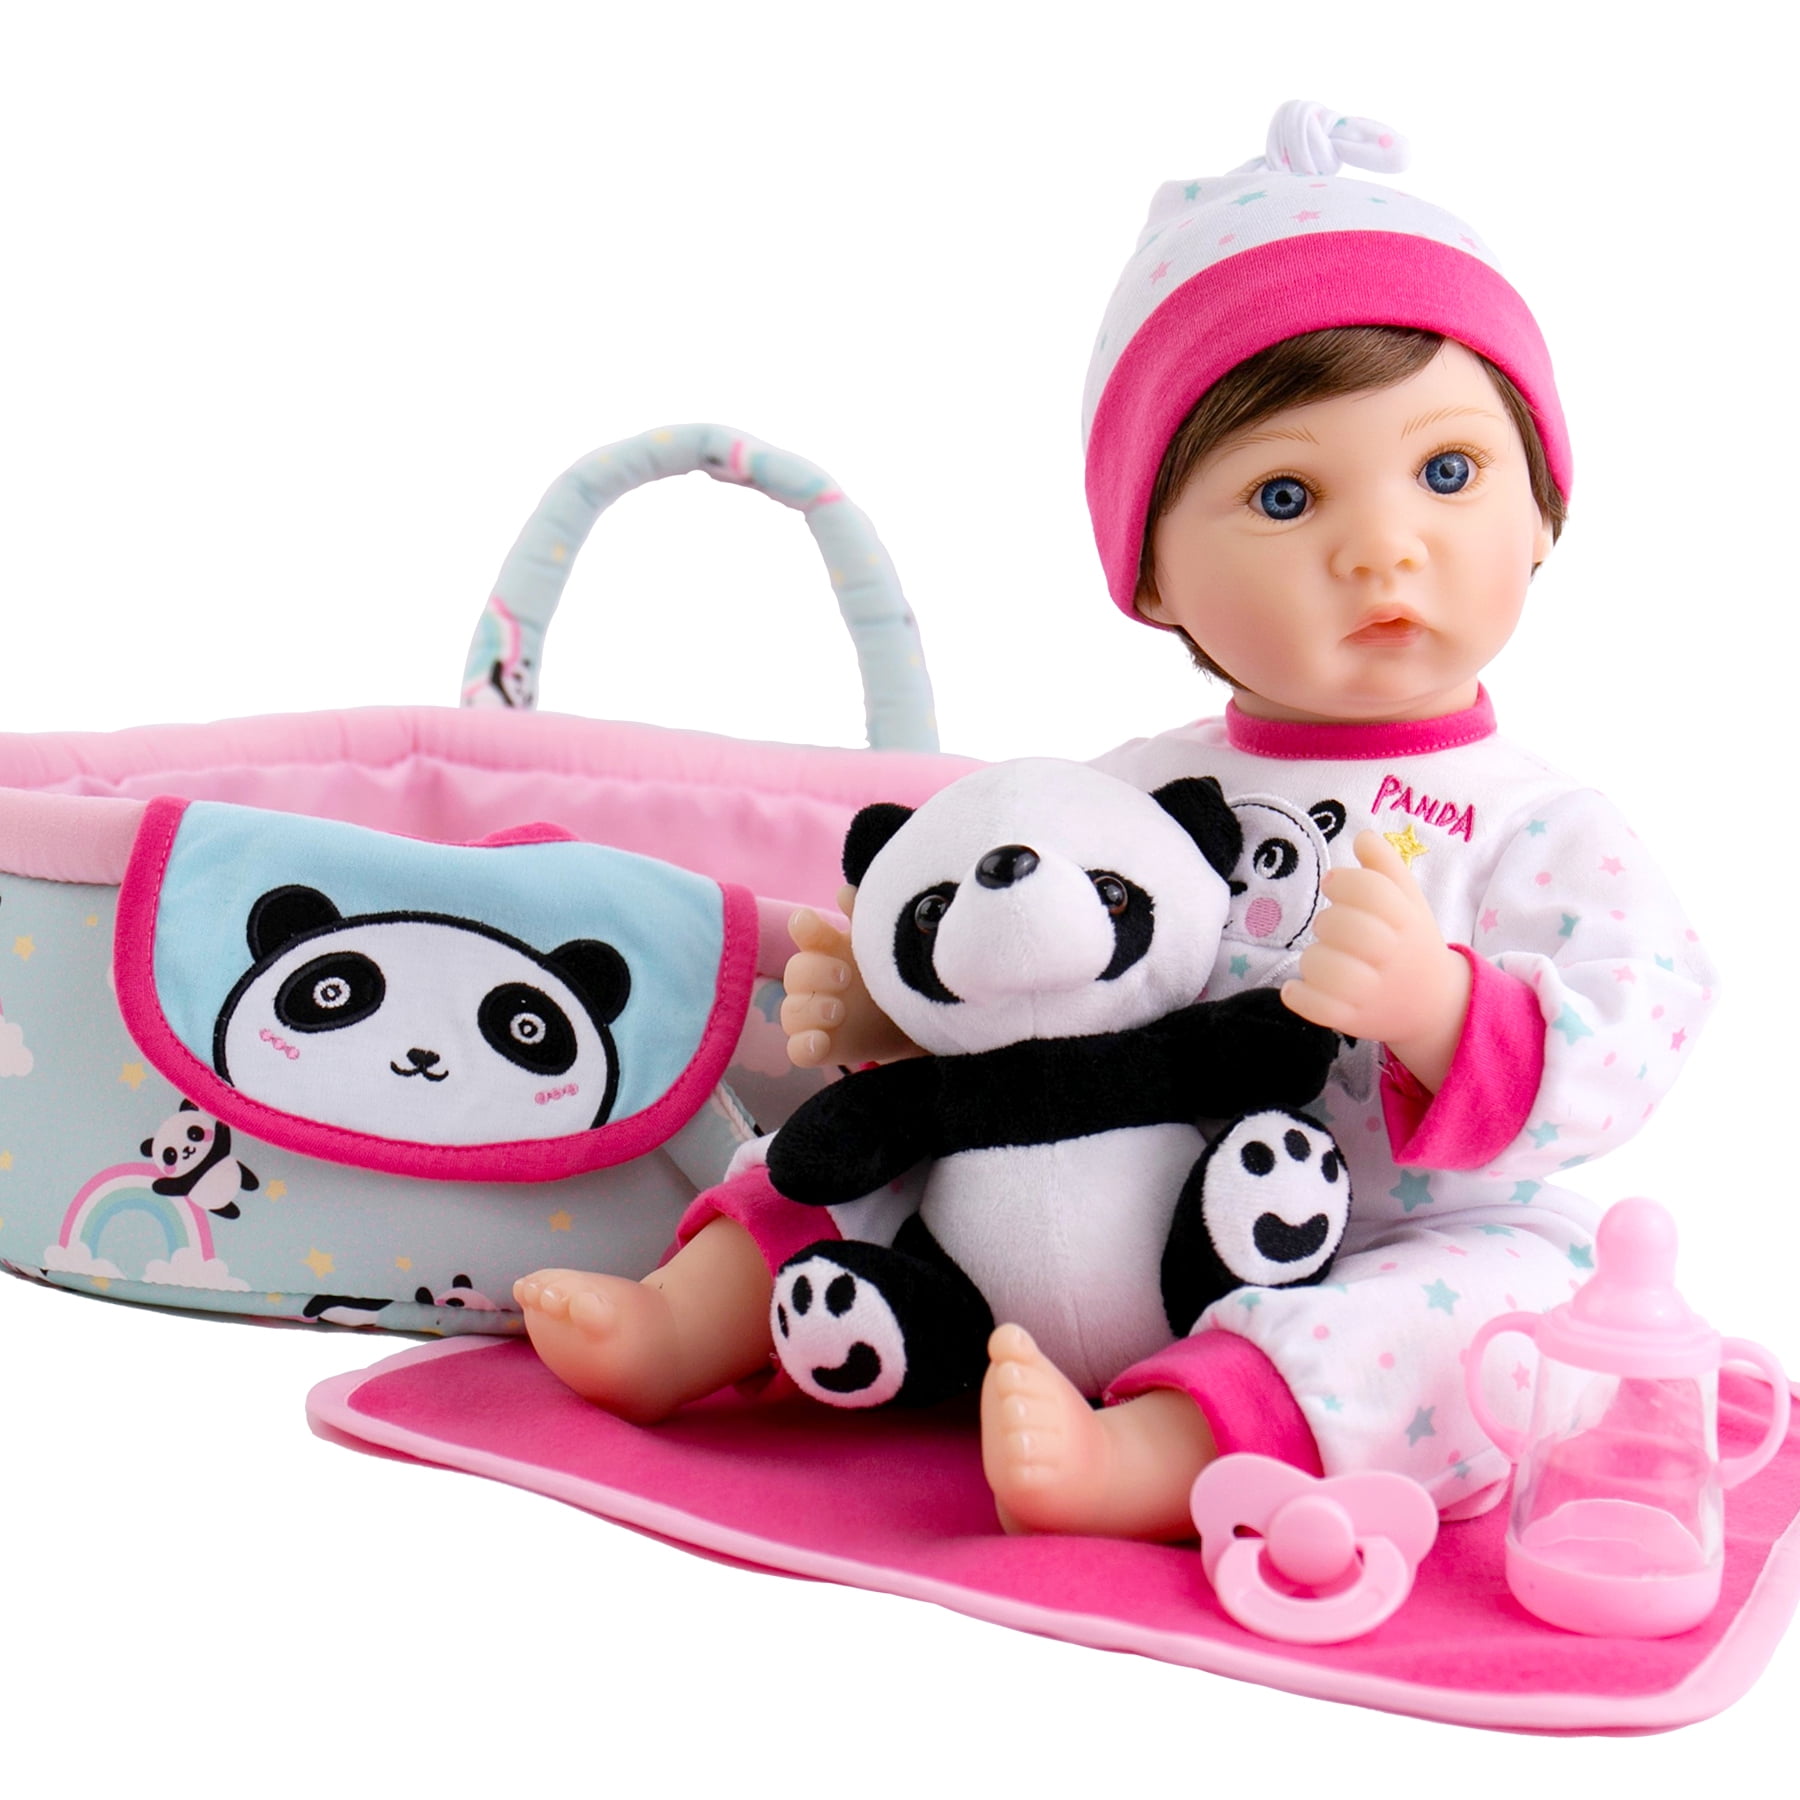 Aori Reborn Baby Dolls - Realistic Baby Doll 22 inch Lifelike Newborn Baby  Girl Doll with Panda Theme Gift Set